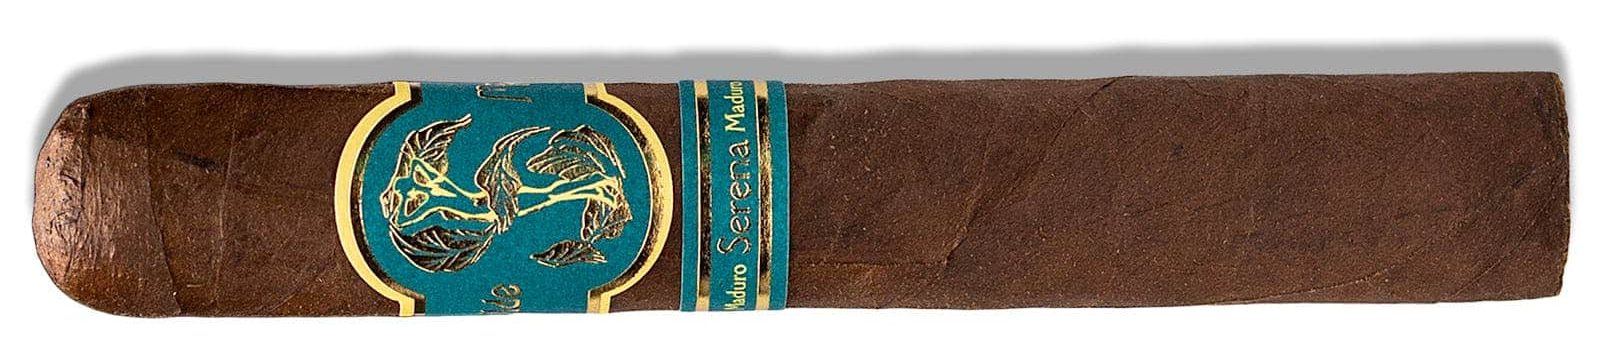 matilde-announces-serena-maduro-–-cigar-news